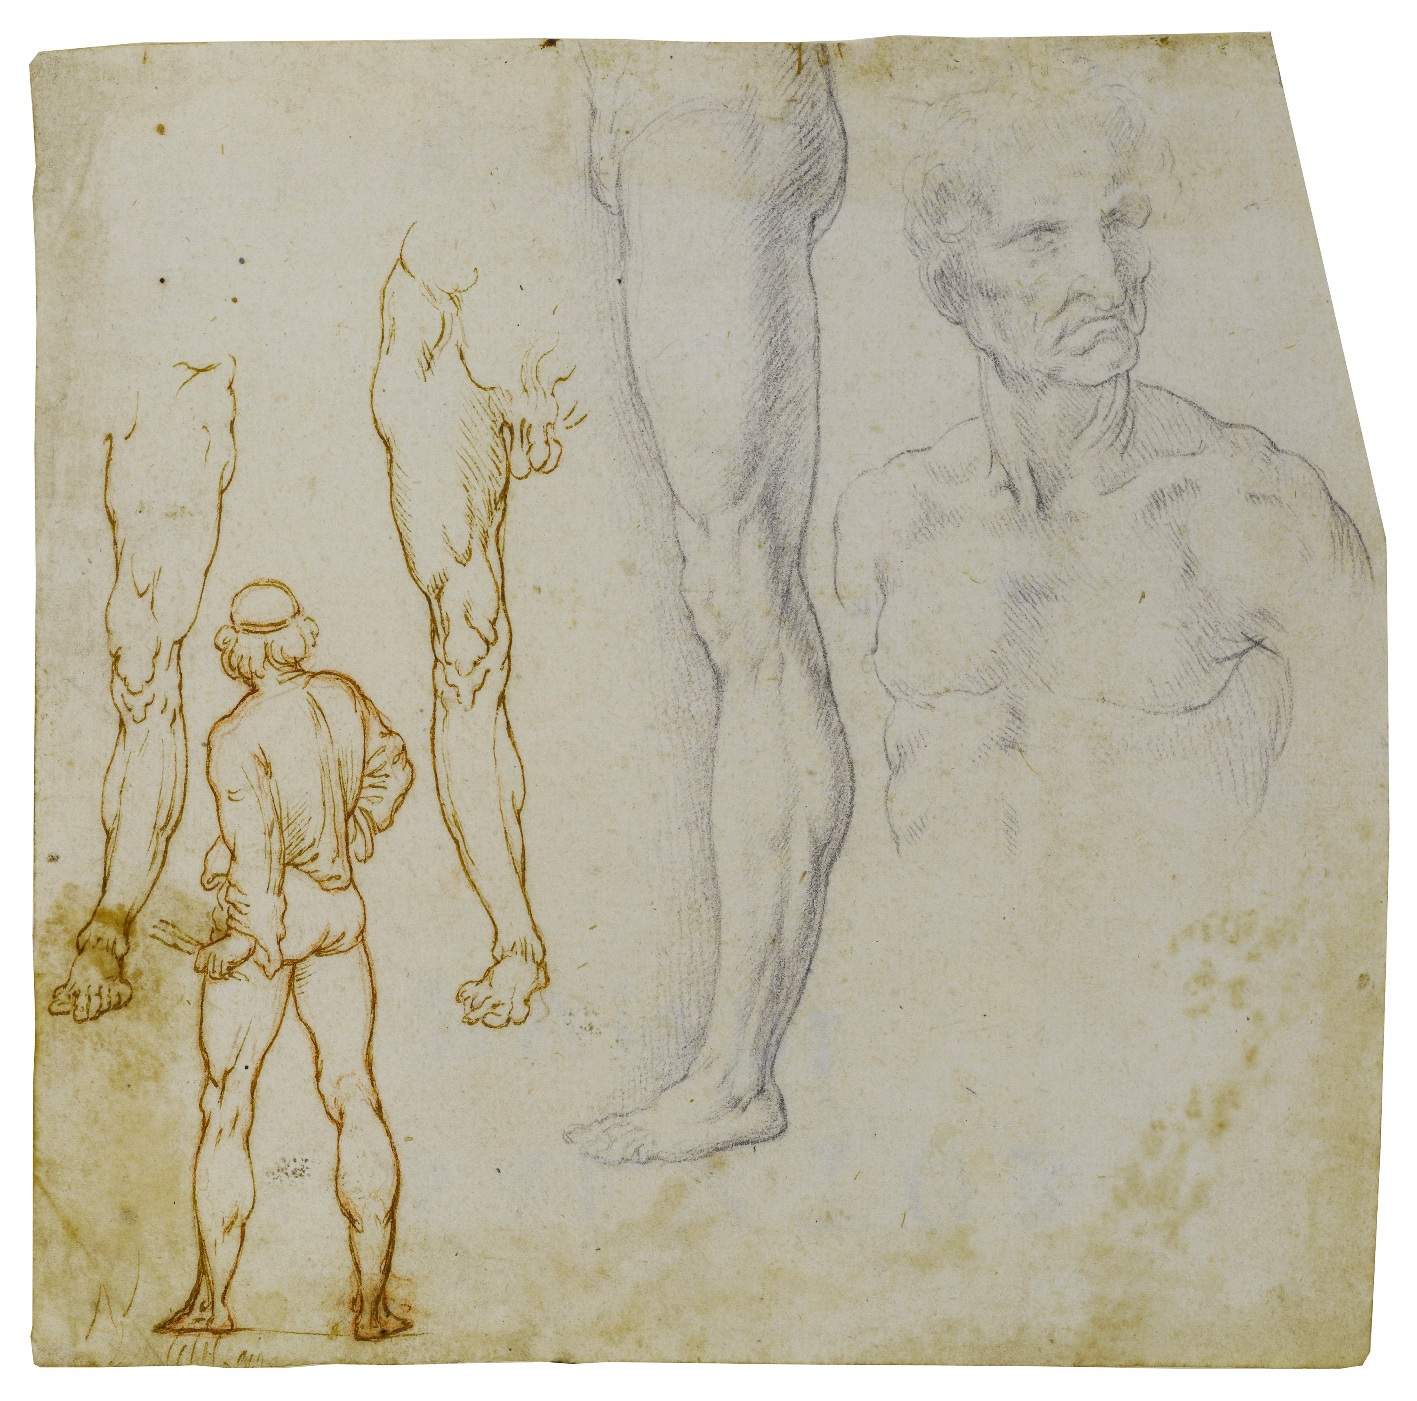 An exhibition on Leonardo's anatomical studies in Vinci